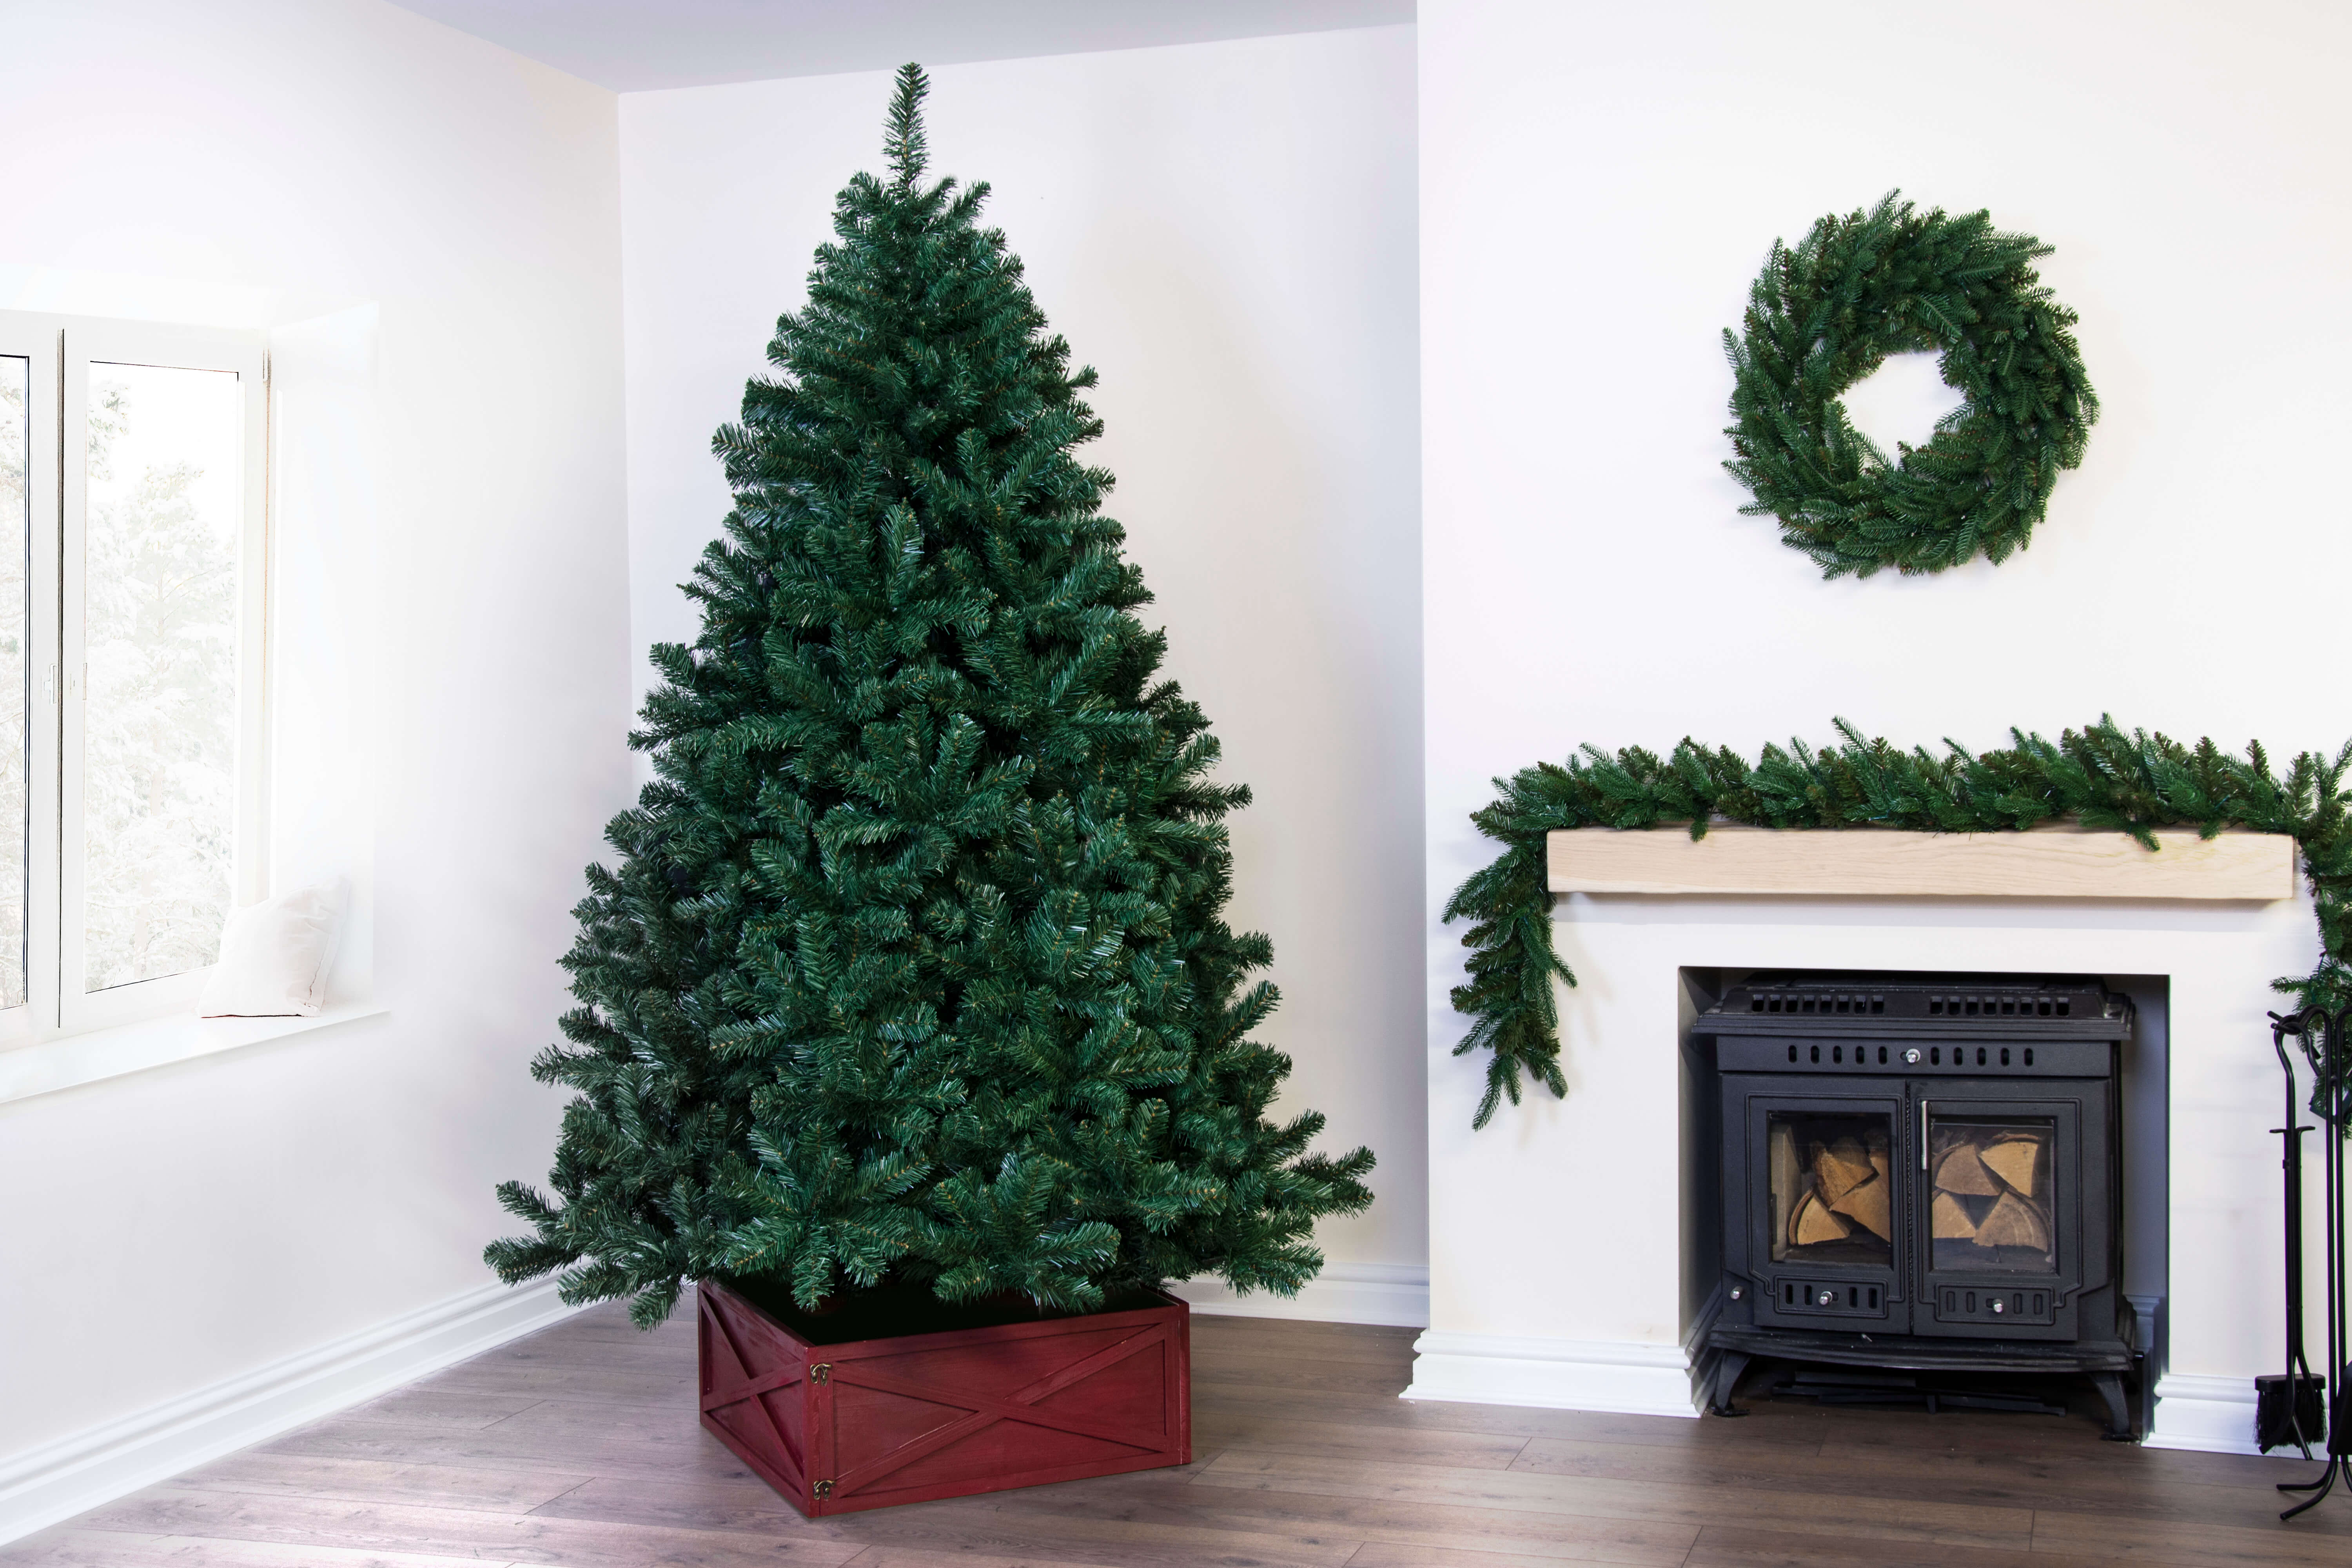 The 10ft Arbor Vitae Fir Tree | Christmas Tree World